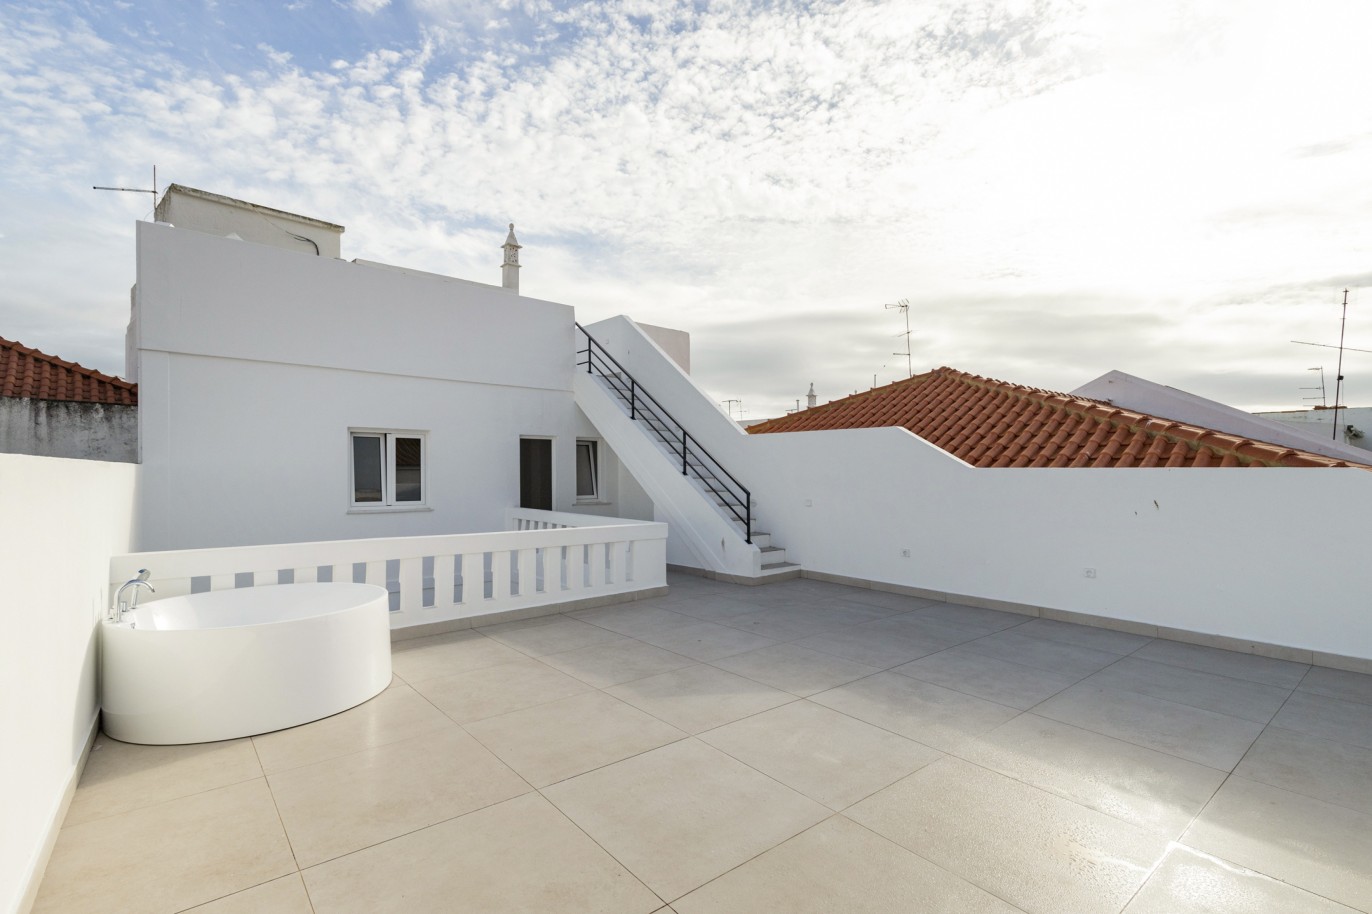 10 Bedroom Villa à vendre, à Portimão, Algarve_216058